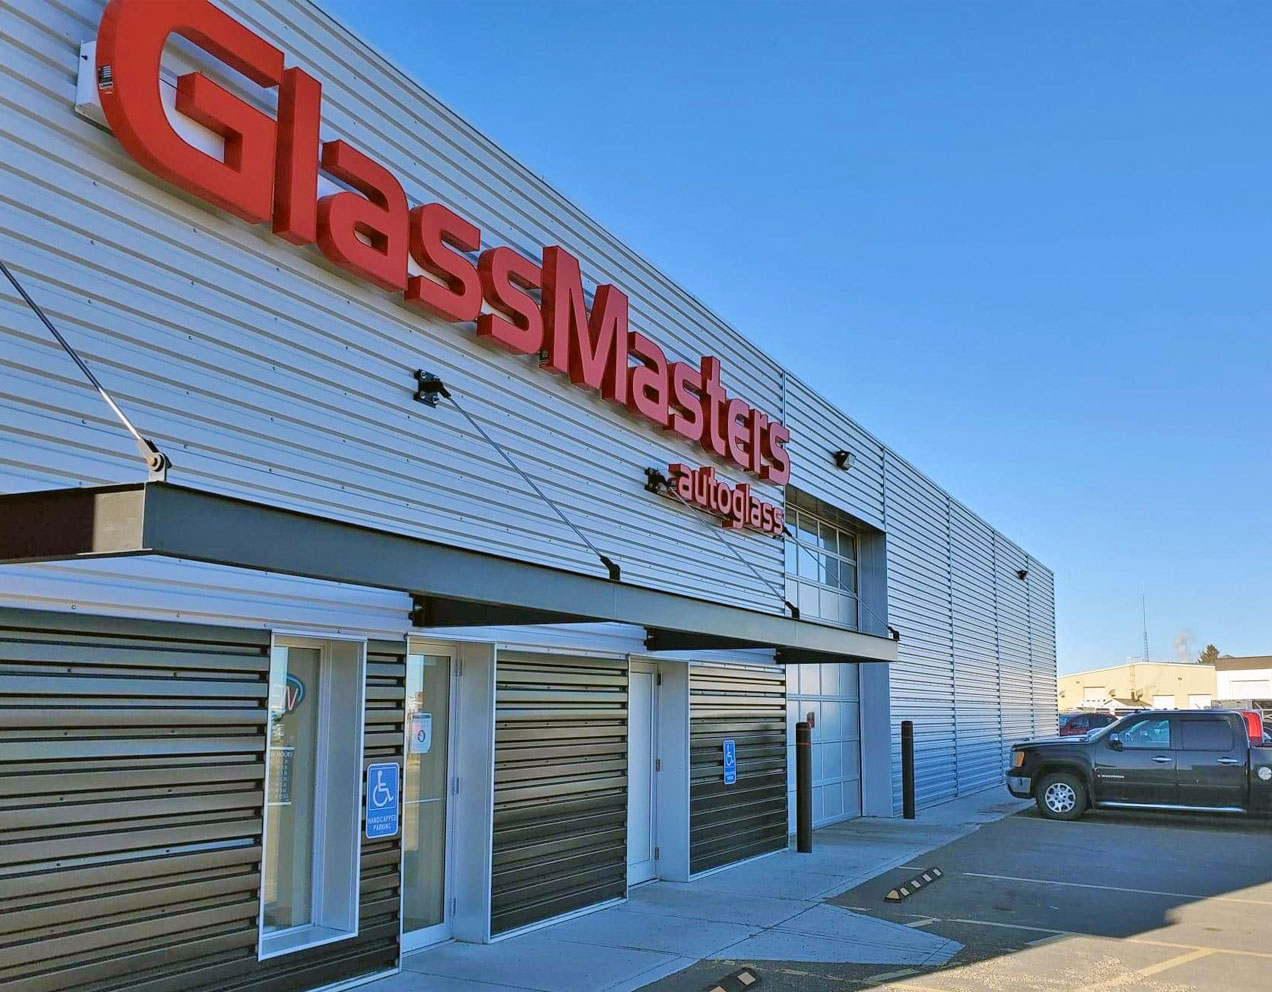 GlassMasters Autoglass Side and Rear Glass Replacement - GlassMasters  Autoglass - Windshield and Auto Glass Repair and Replacement For All Makes  and Models